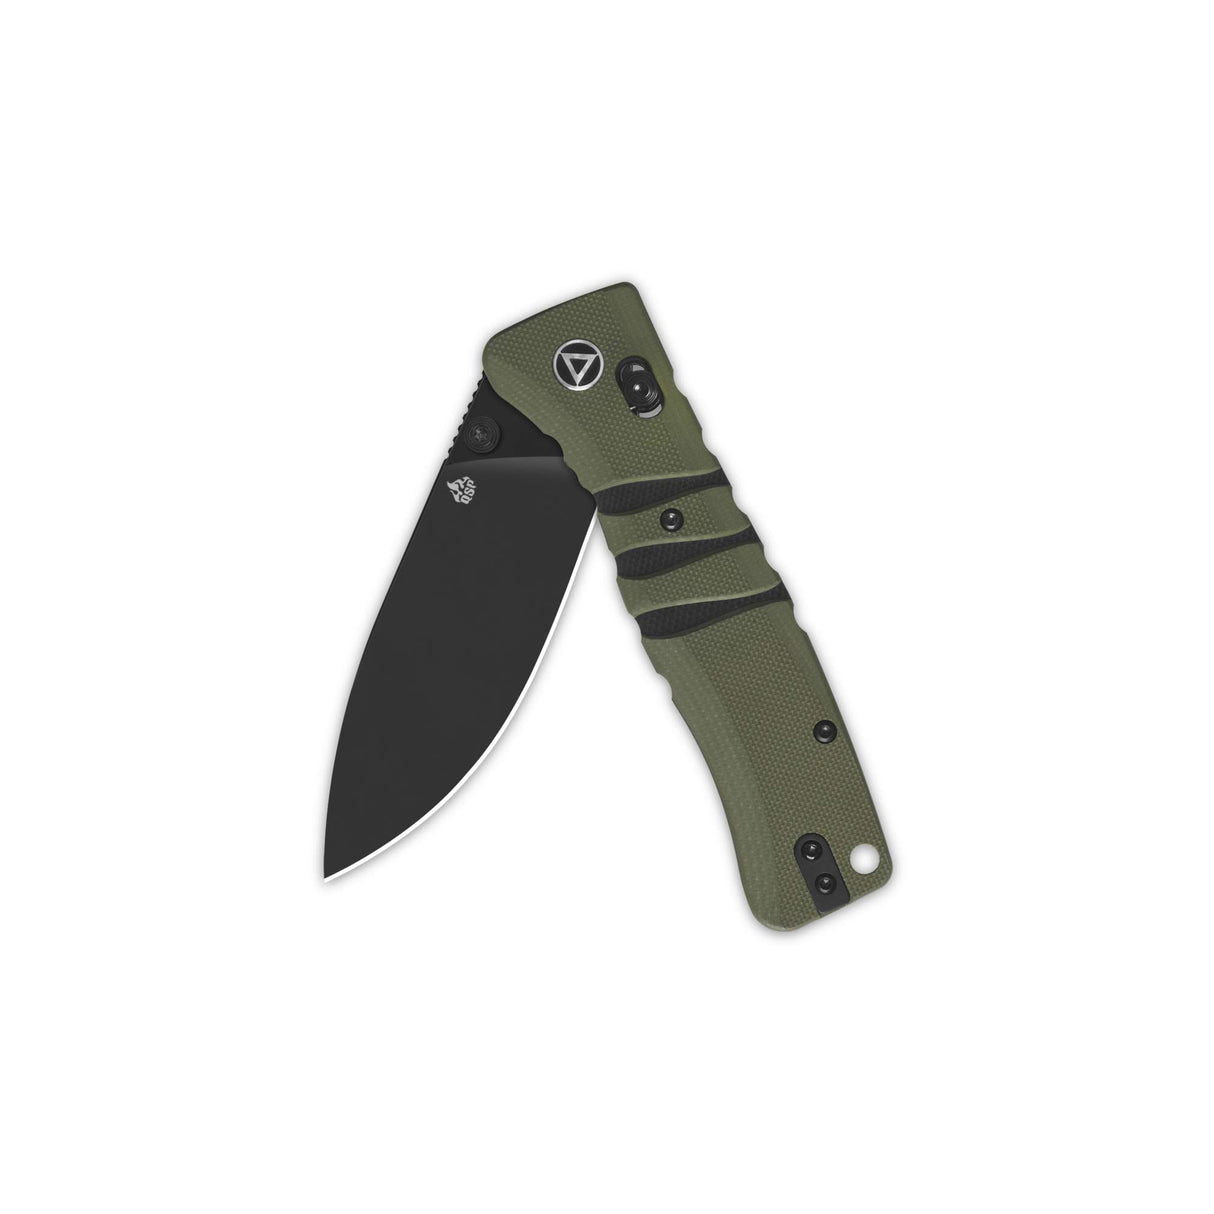 QSP Ripley Glyde Lock Pocket Knife 14C28N Blade Green/Black G10 Handle